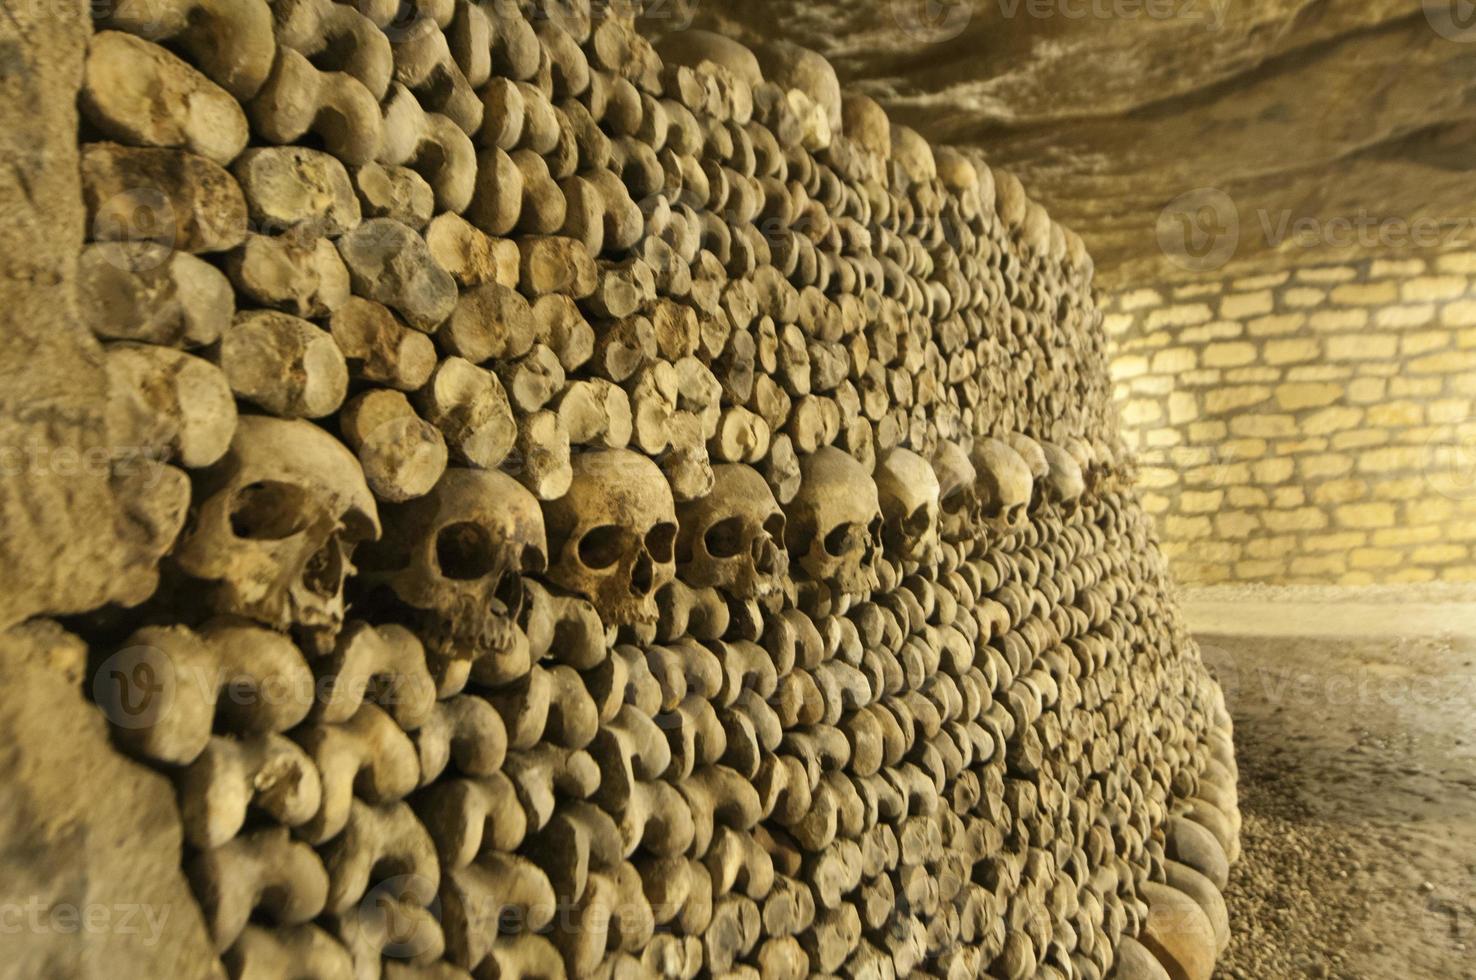 Paris Catacombs Skulls and bones photo